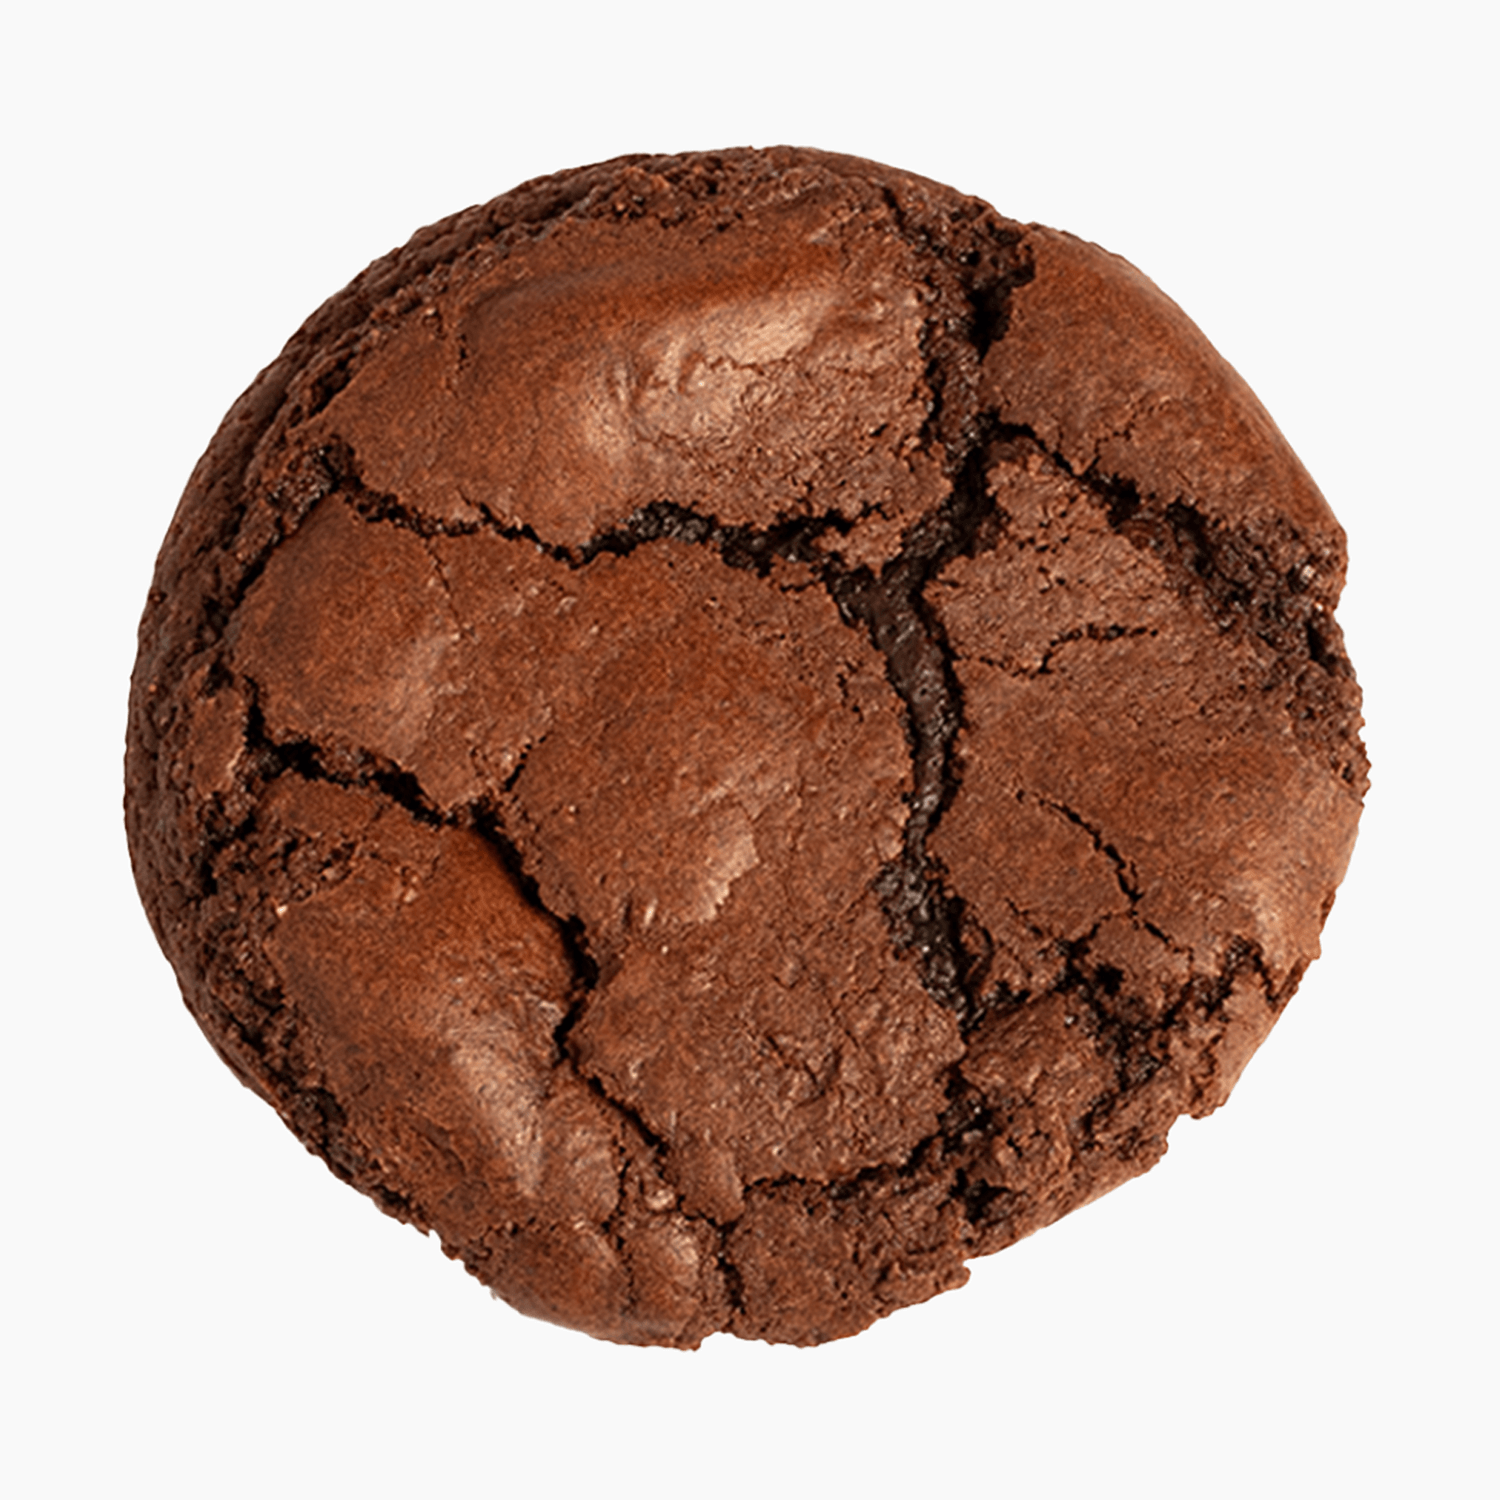 Cocosutra Fudgy Brownie Cookie